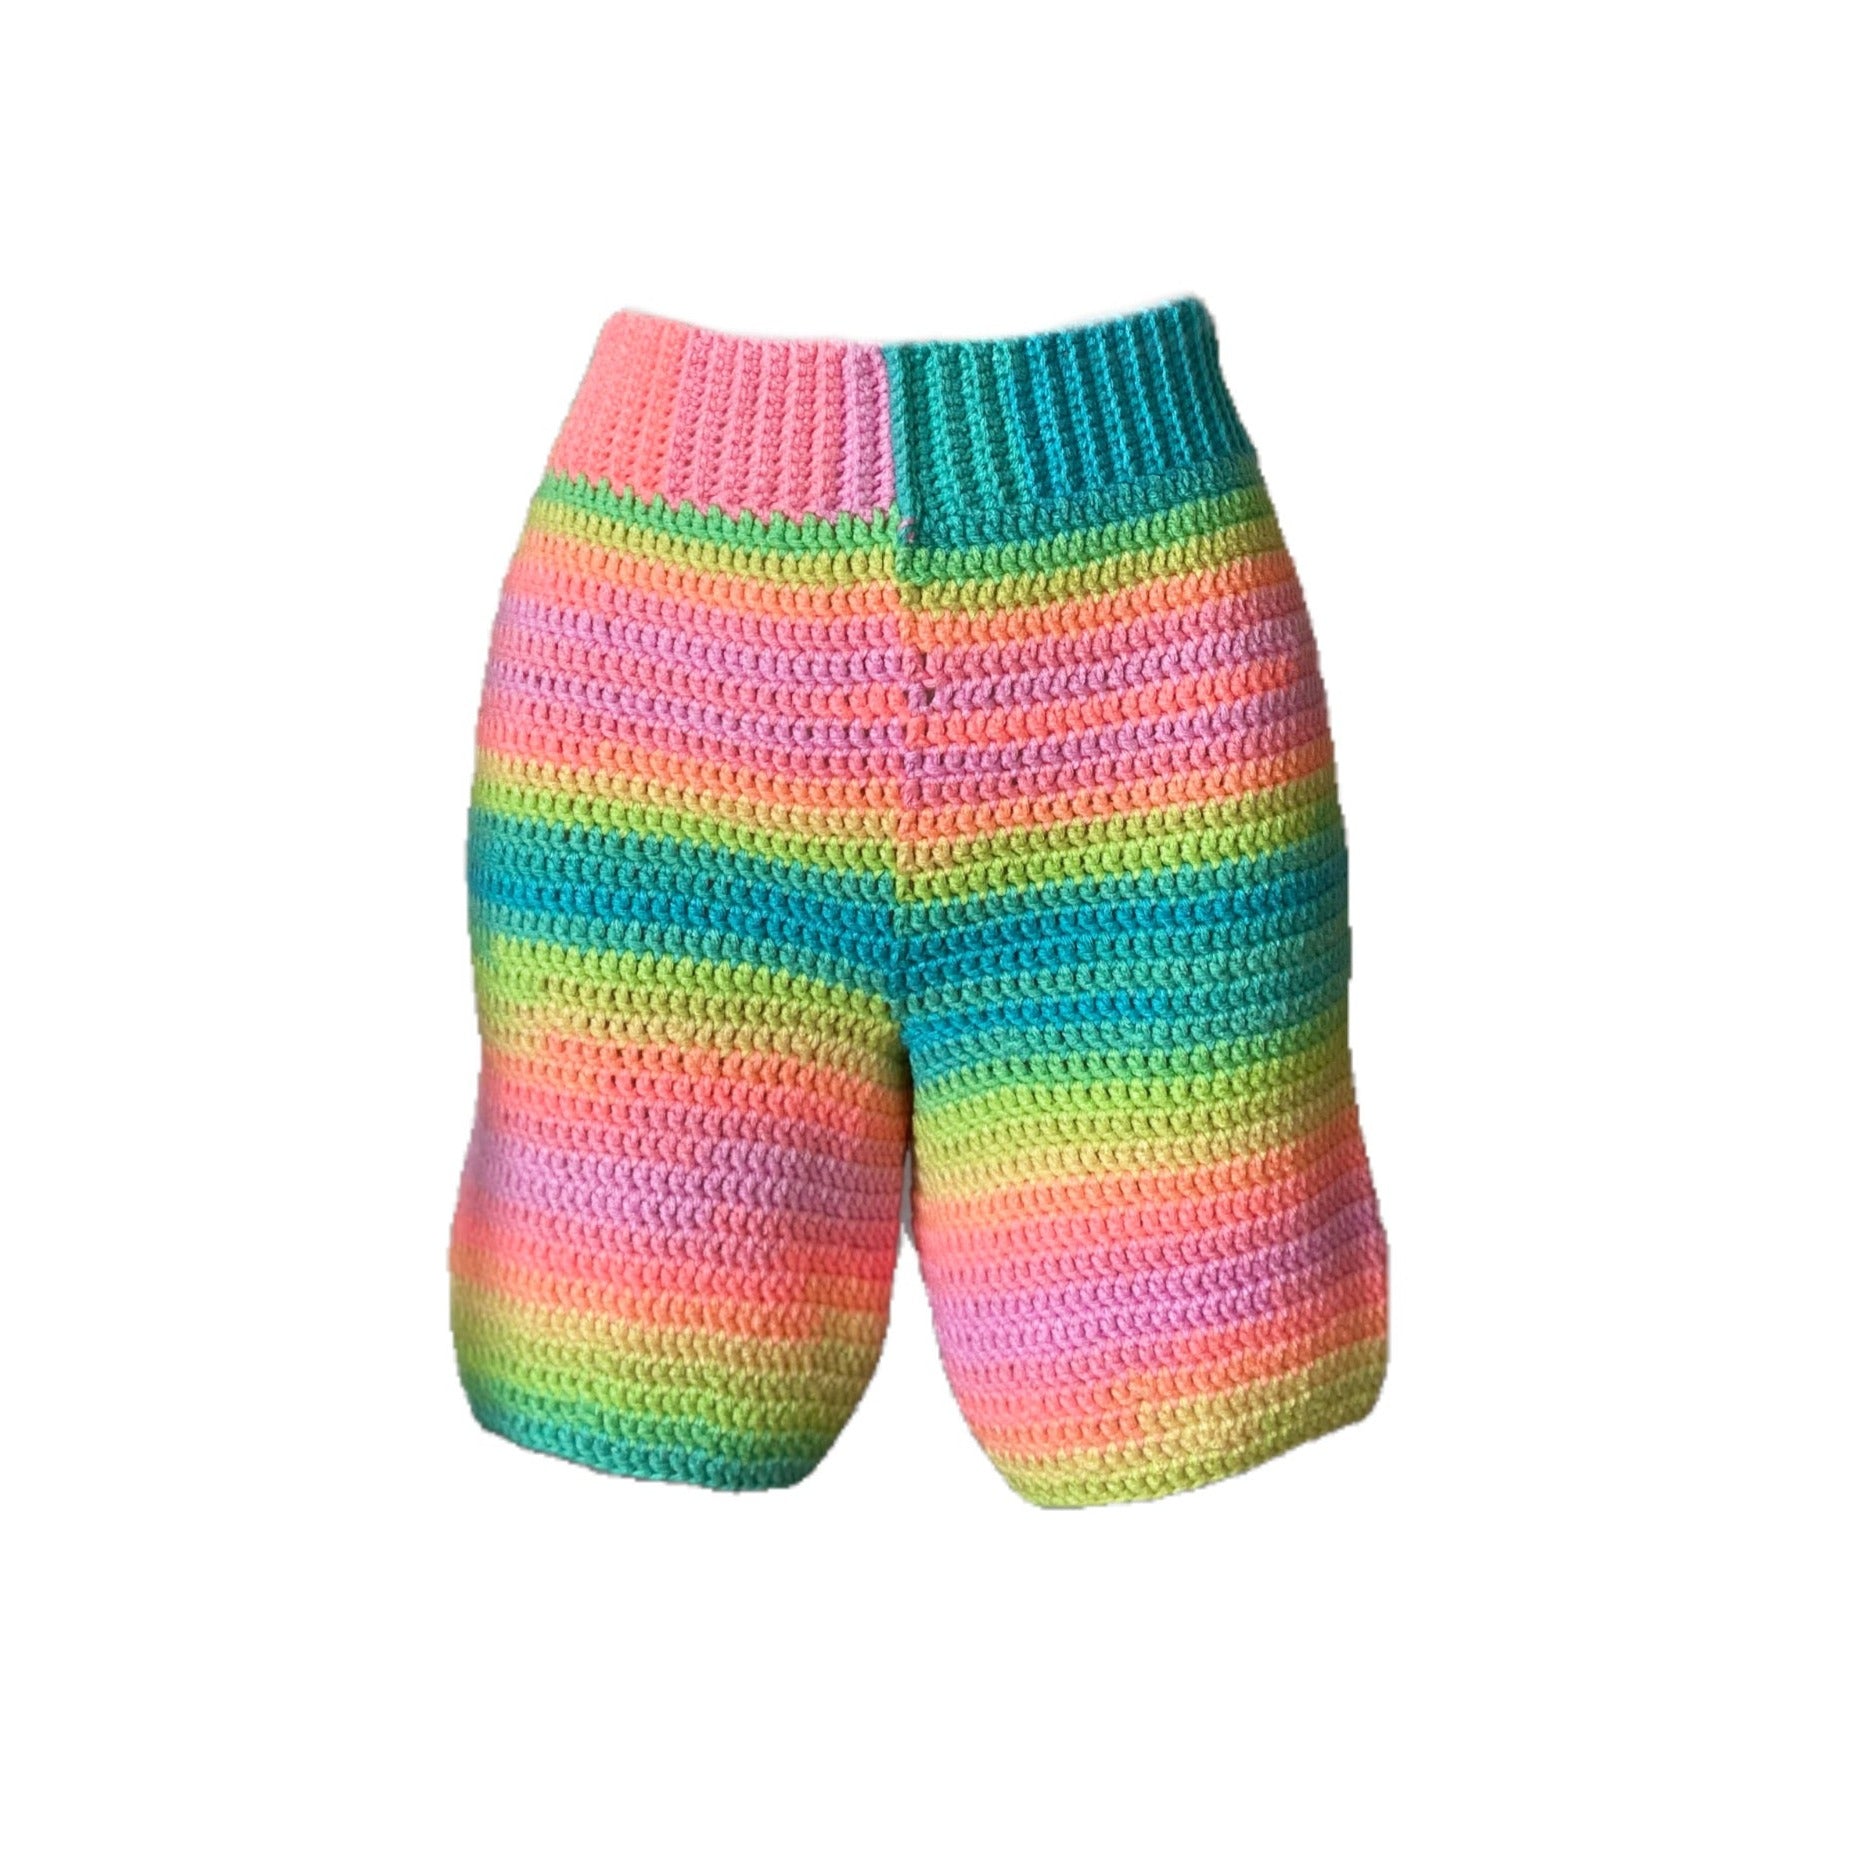 shopdigitalgirl | crochet shorts | rainbow sherbet shorts | one of a kind